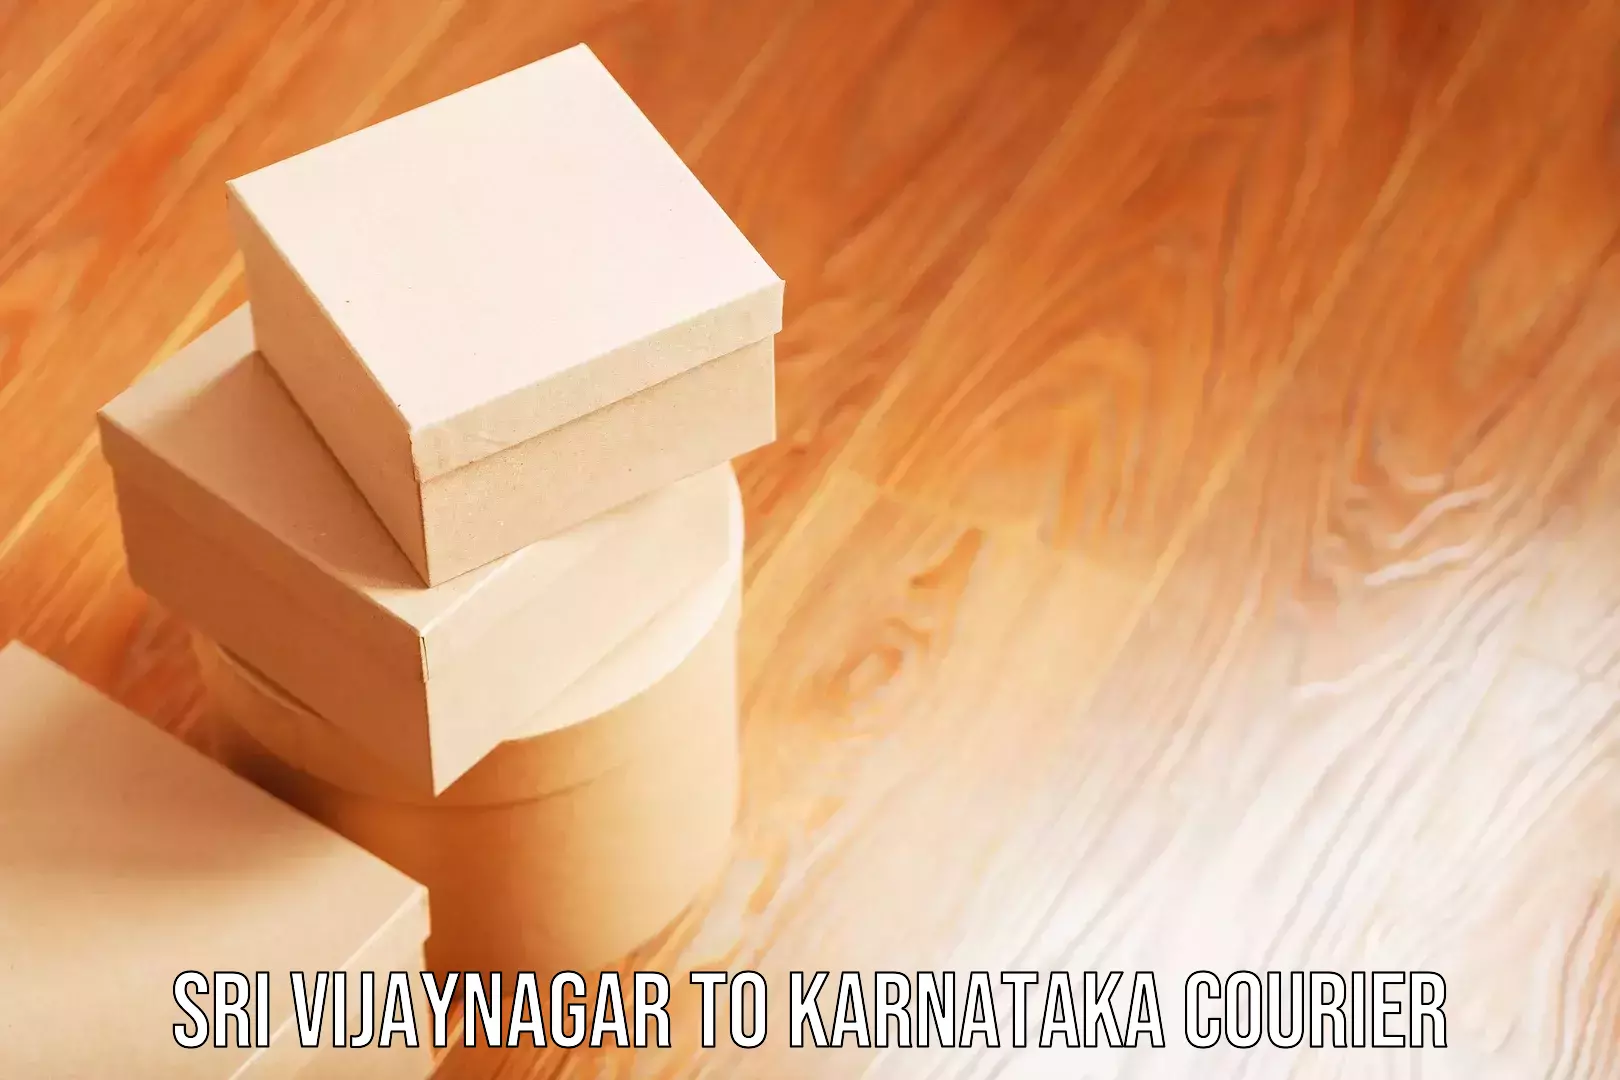 Baggage relocation service Sri Vijaynagar to Karnataka